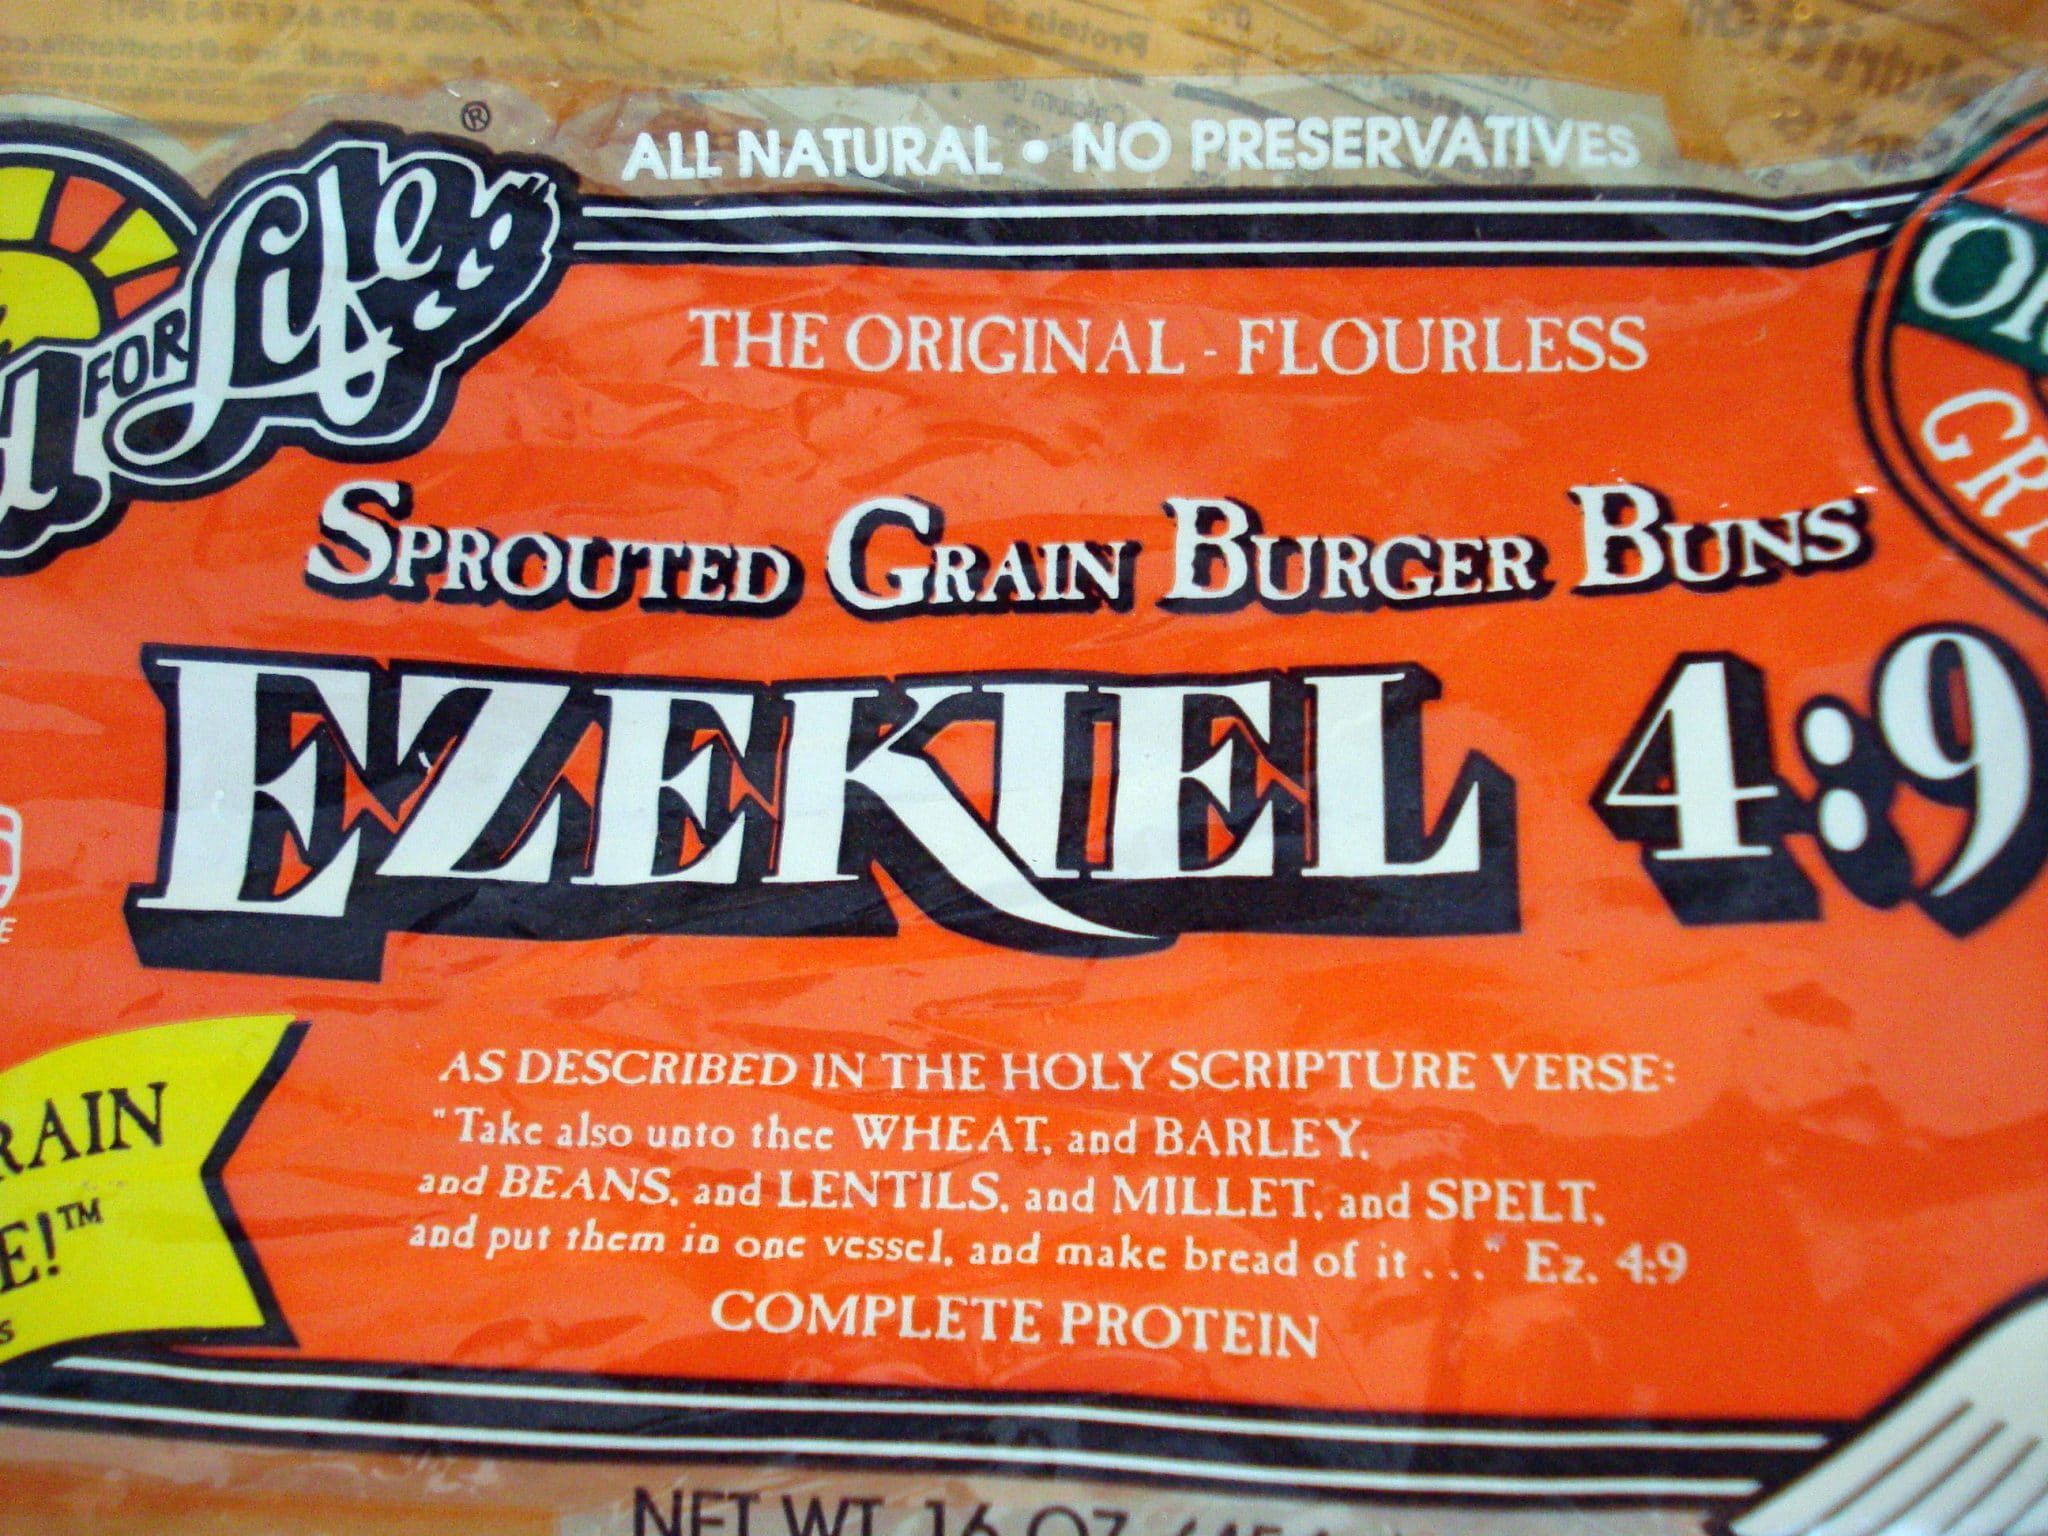 Picture of loaf of Ezekiel bread